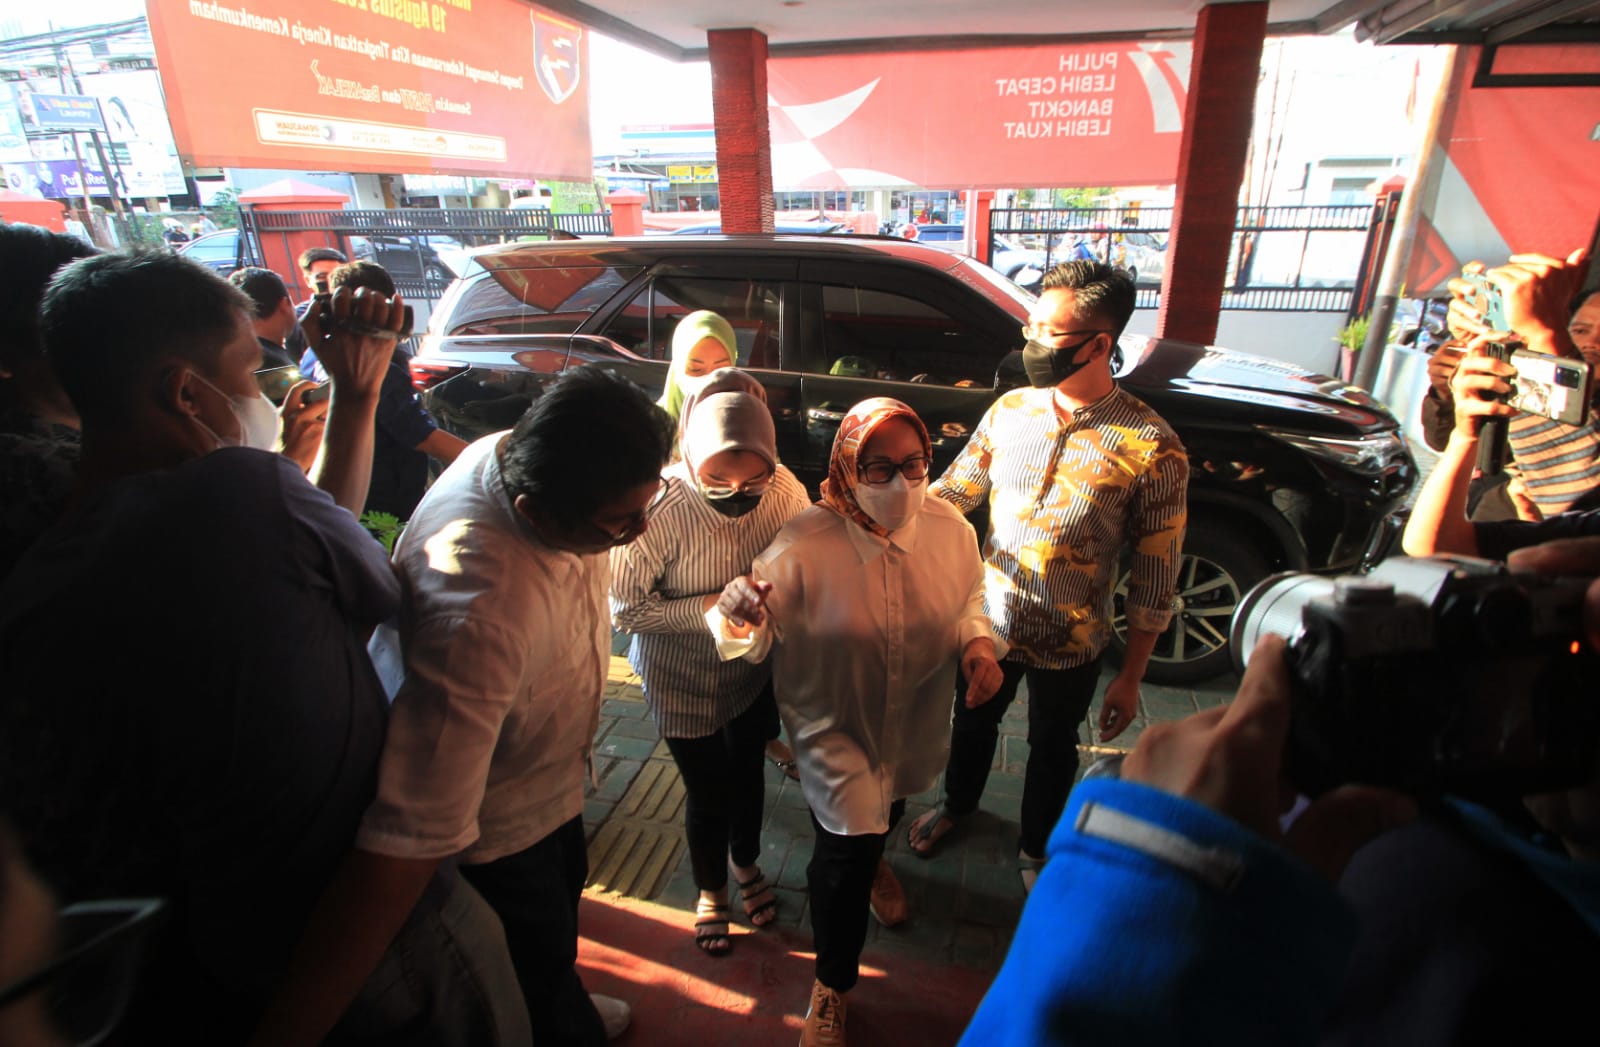 Mantan Gubernur Banten Ratu Atut Chosiyah mendatangi Bapas Serang usai bebas bersyarat, Selasa 6 Sep